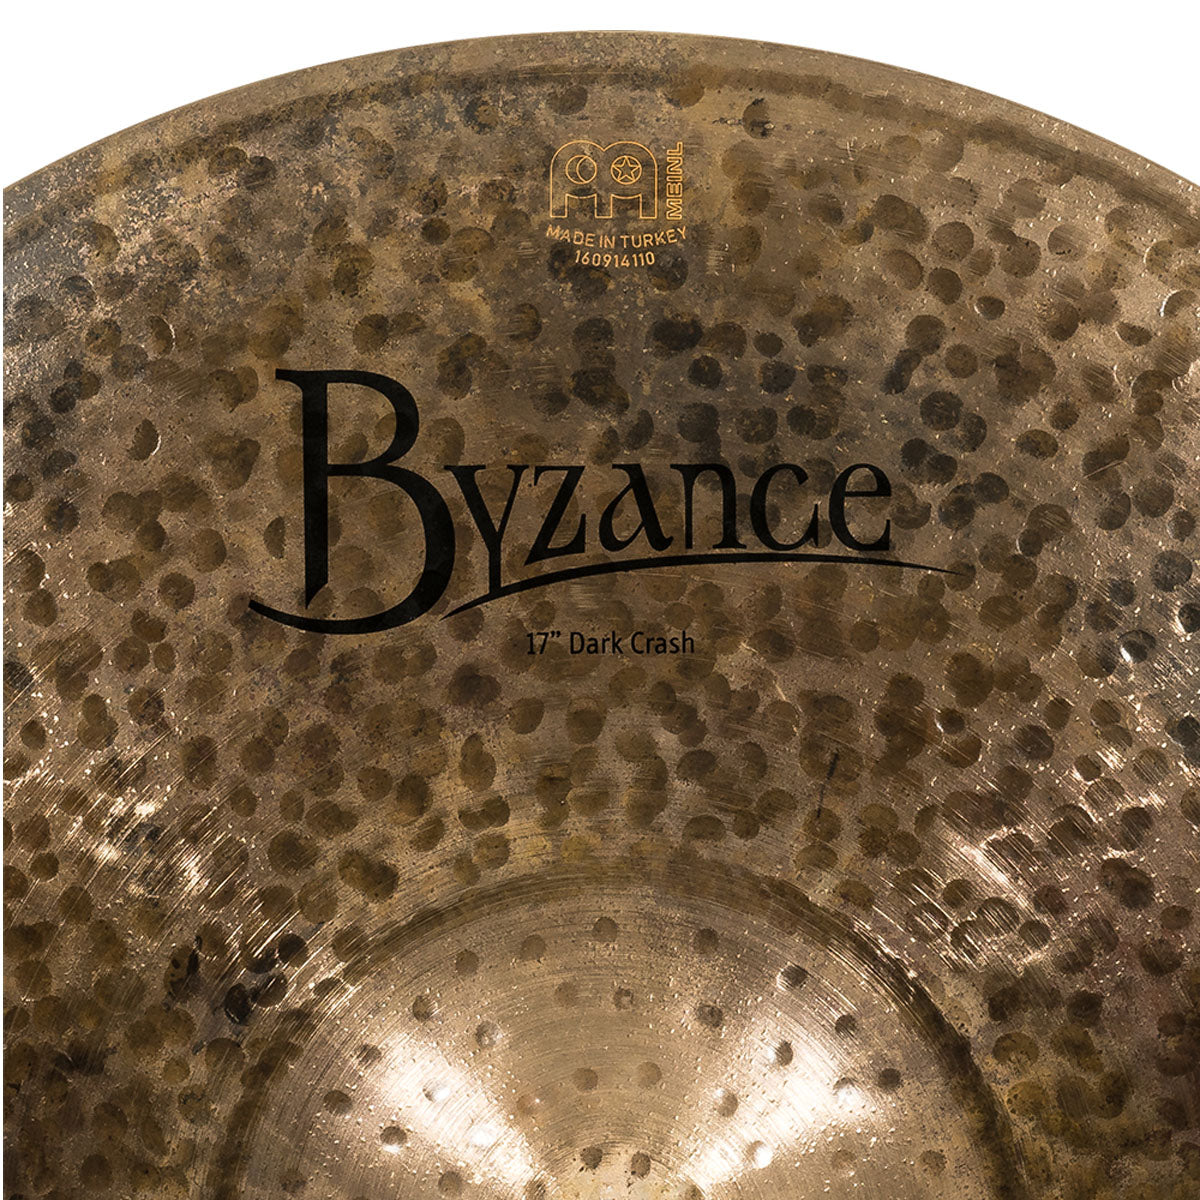 Meinl Byzance Dark 17" Crash Cymbal